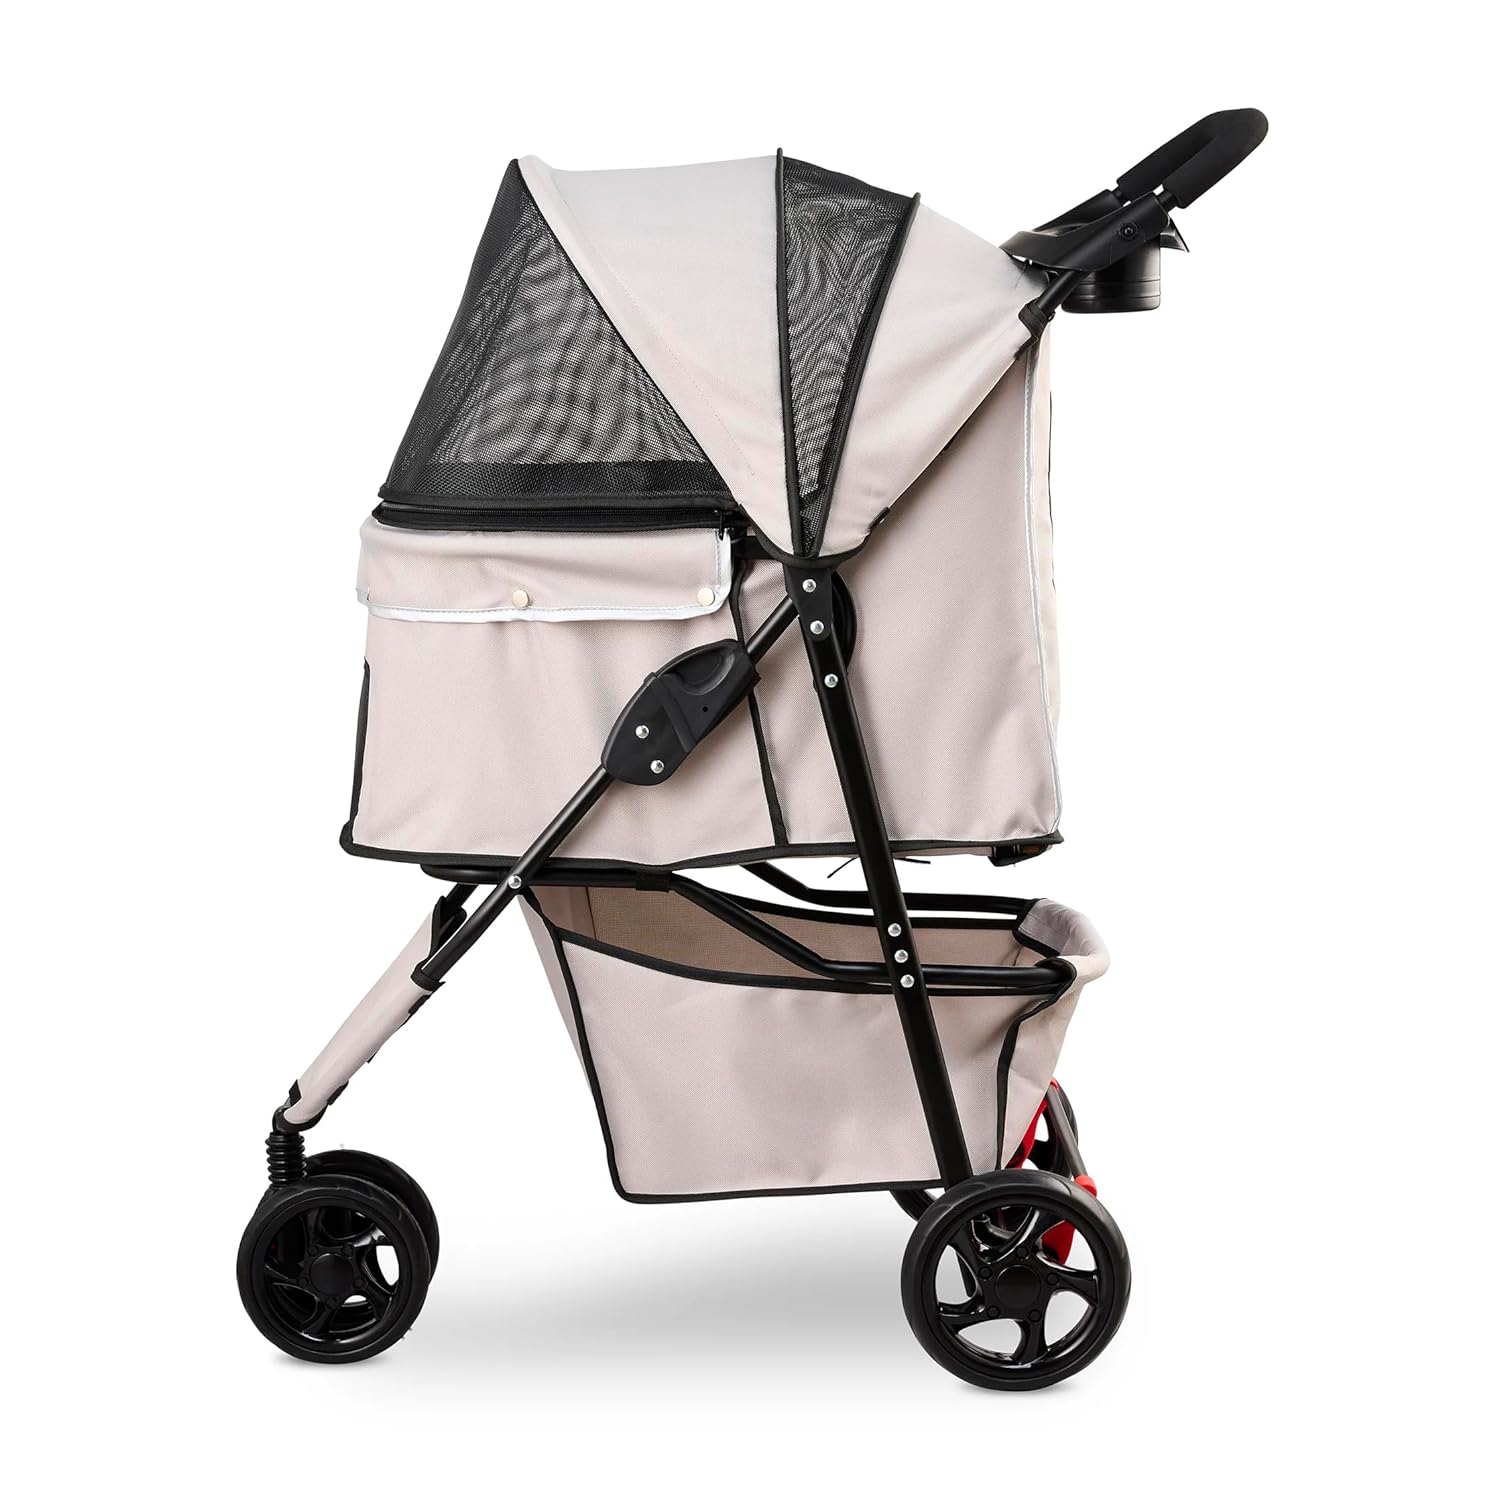 Carlson Pet Products Stroller, Includes 360 Degree Front Wheel Swivel, Rear Wheel Breaks, Reflective Trim, Mesh Panels, Umbrella and Mesh Canopy, Khaki